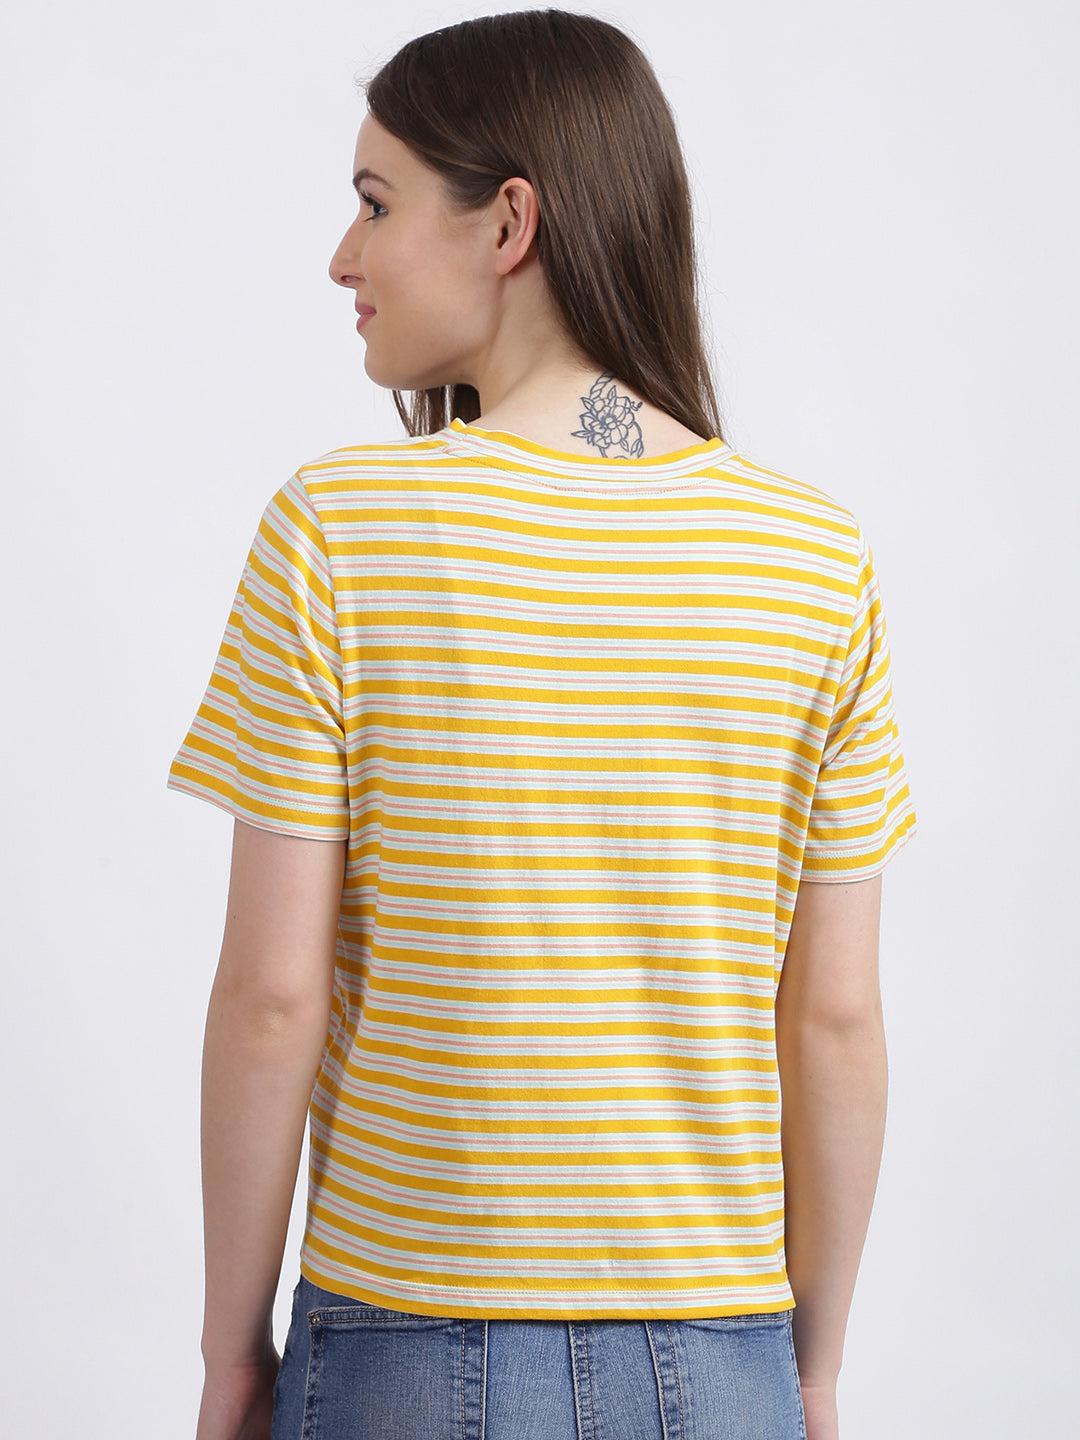 Yellow Striped Regular T-Shirt for Women